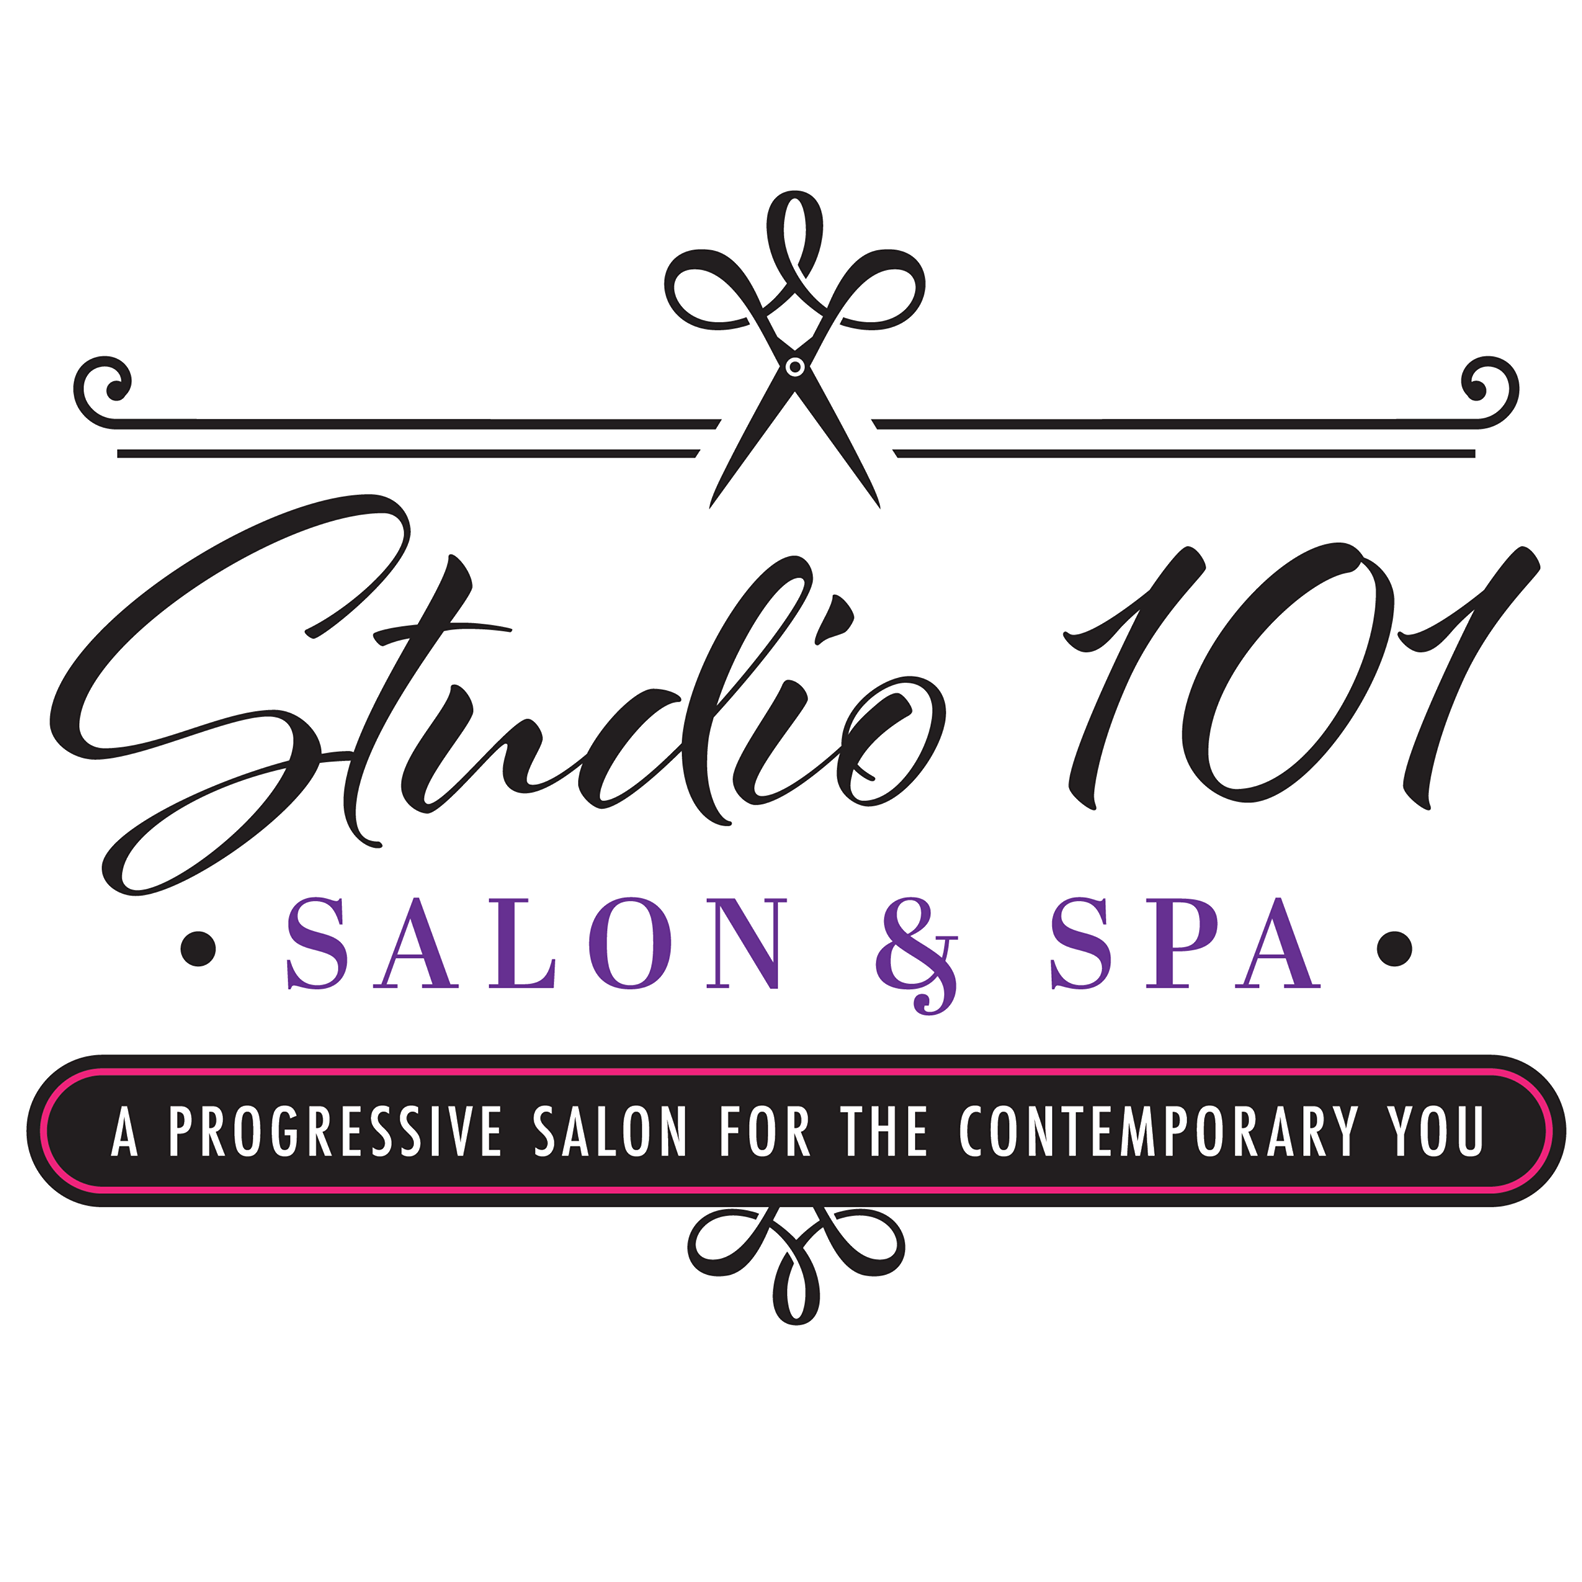 Studio 101 Salon & Spa